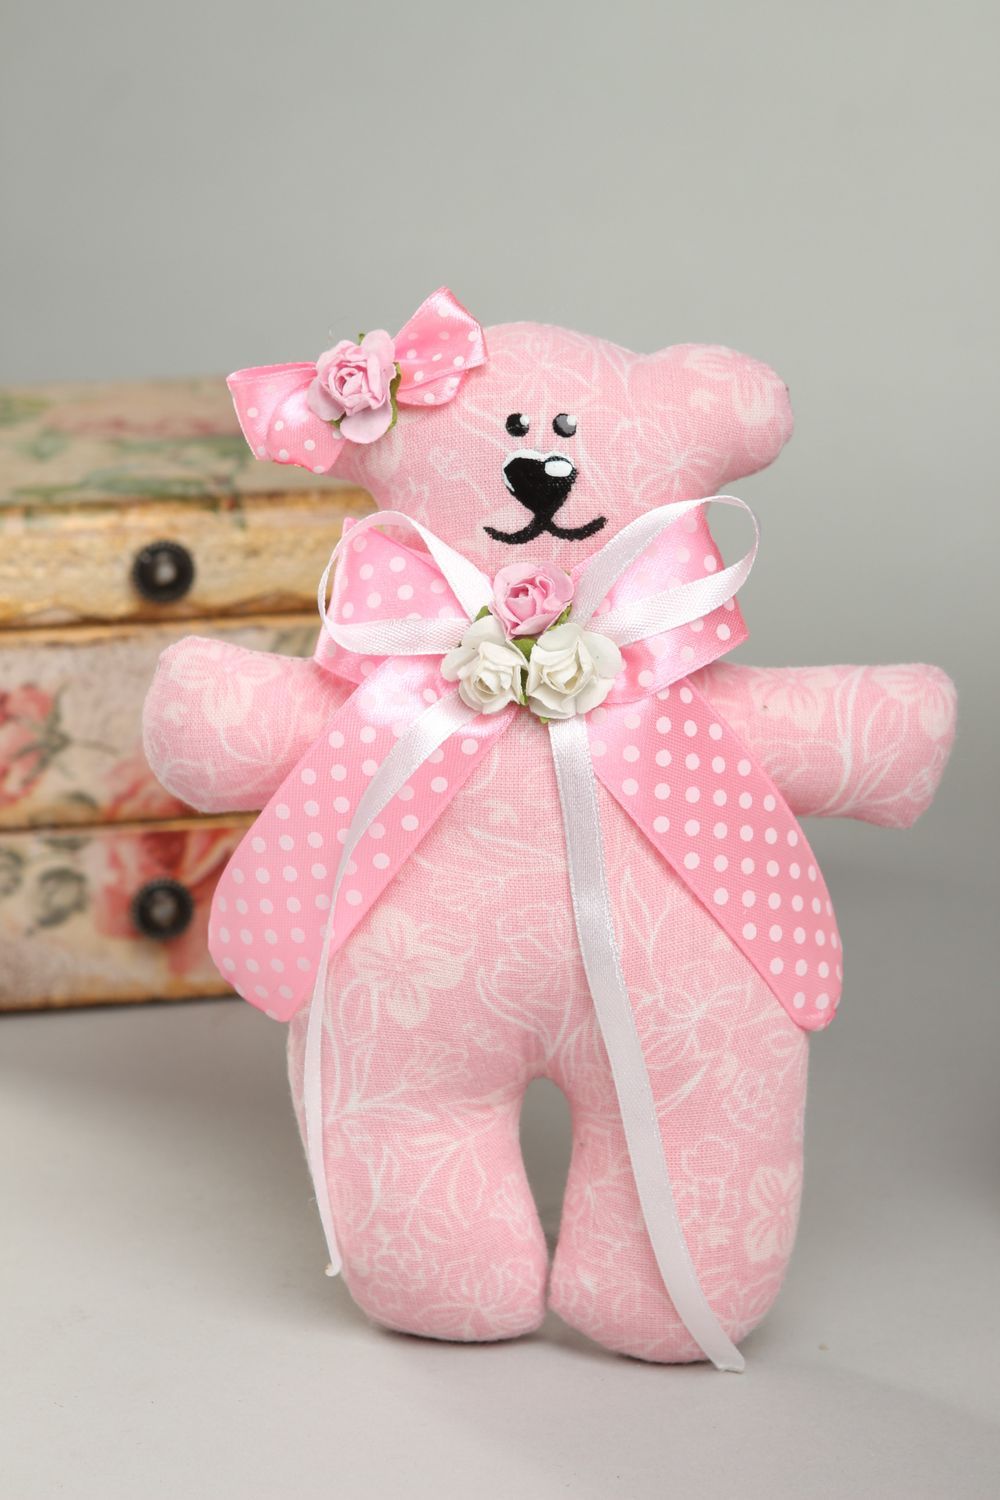 Handmade stuffed toy bear toy cute soft tot for children designer stuffed toys  photo 1